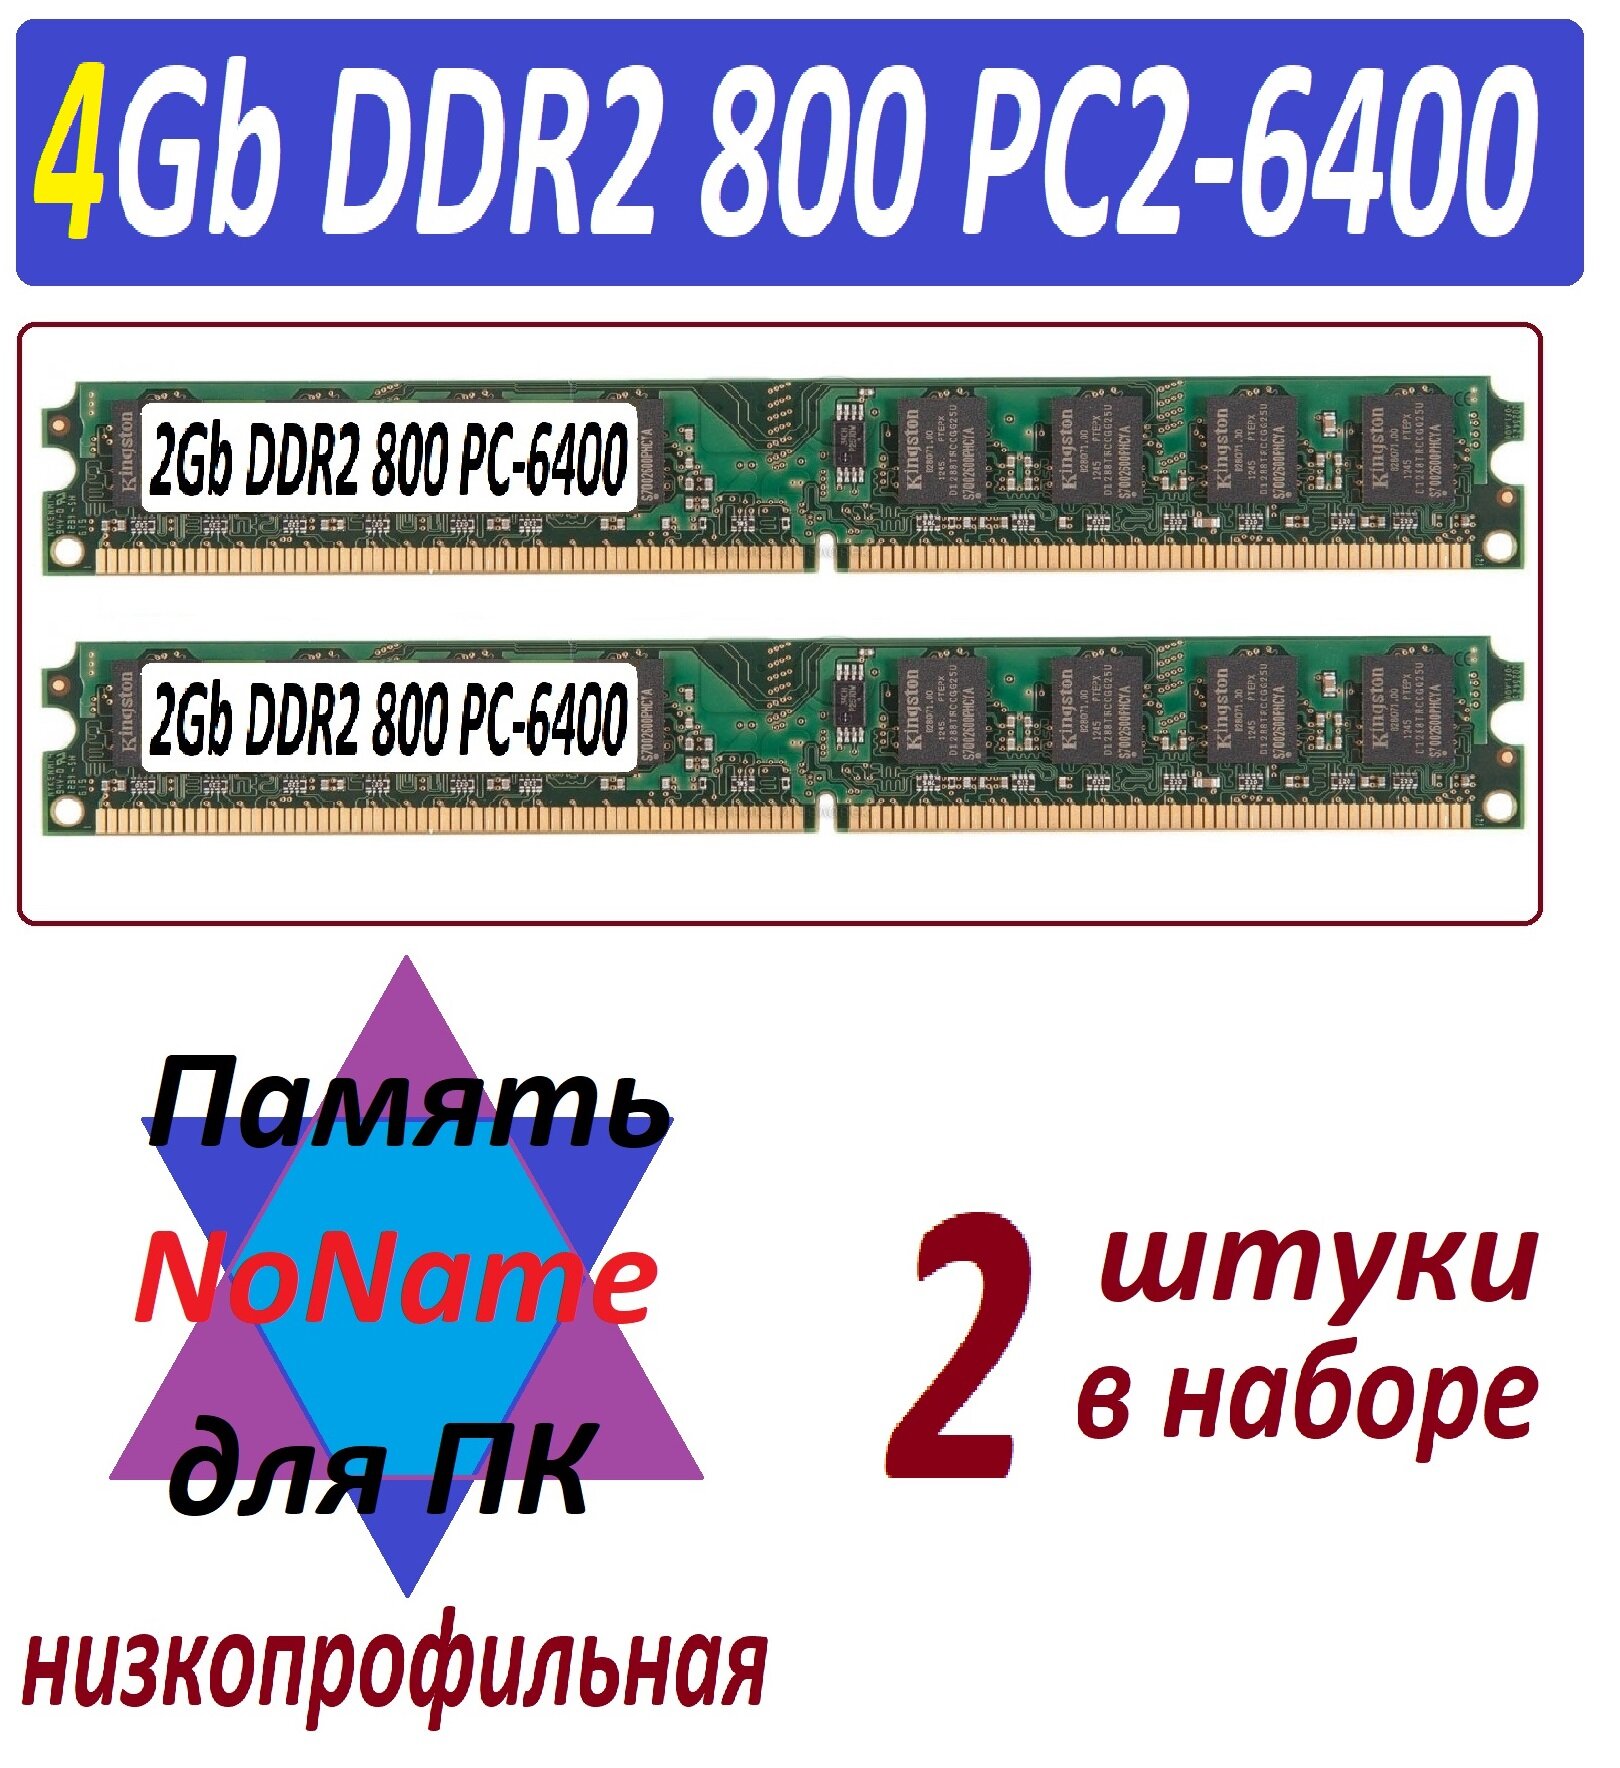 Модули памяти NoName 4gb (2x2Gb) ddr2 800 pc2-6400 в ассортименте - 2 штук